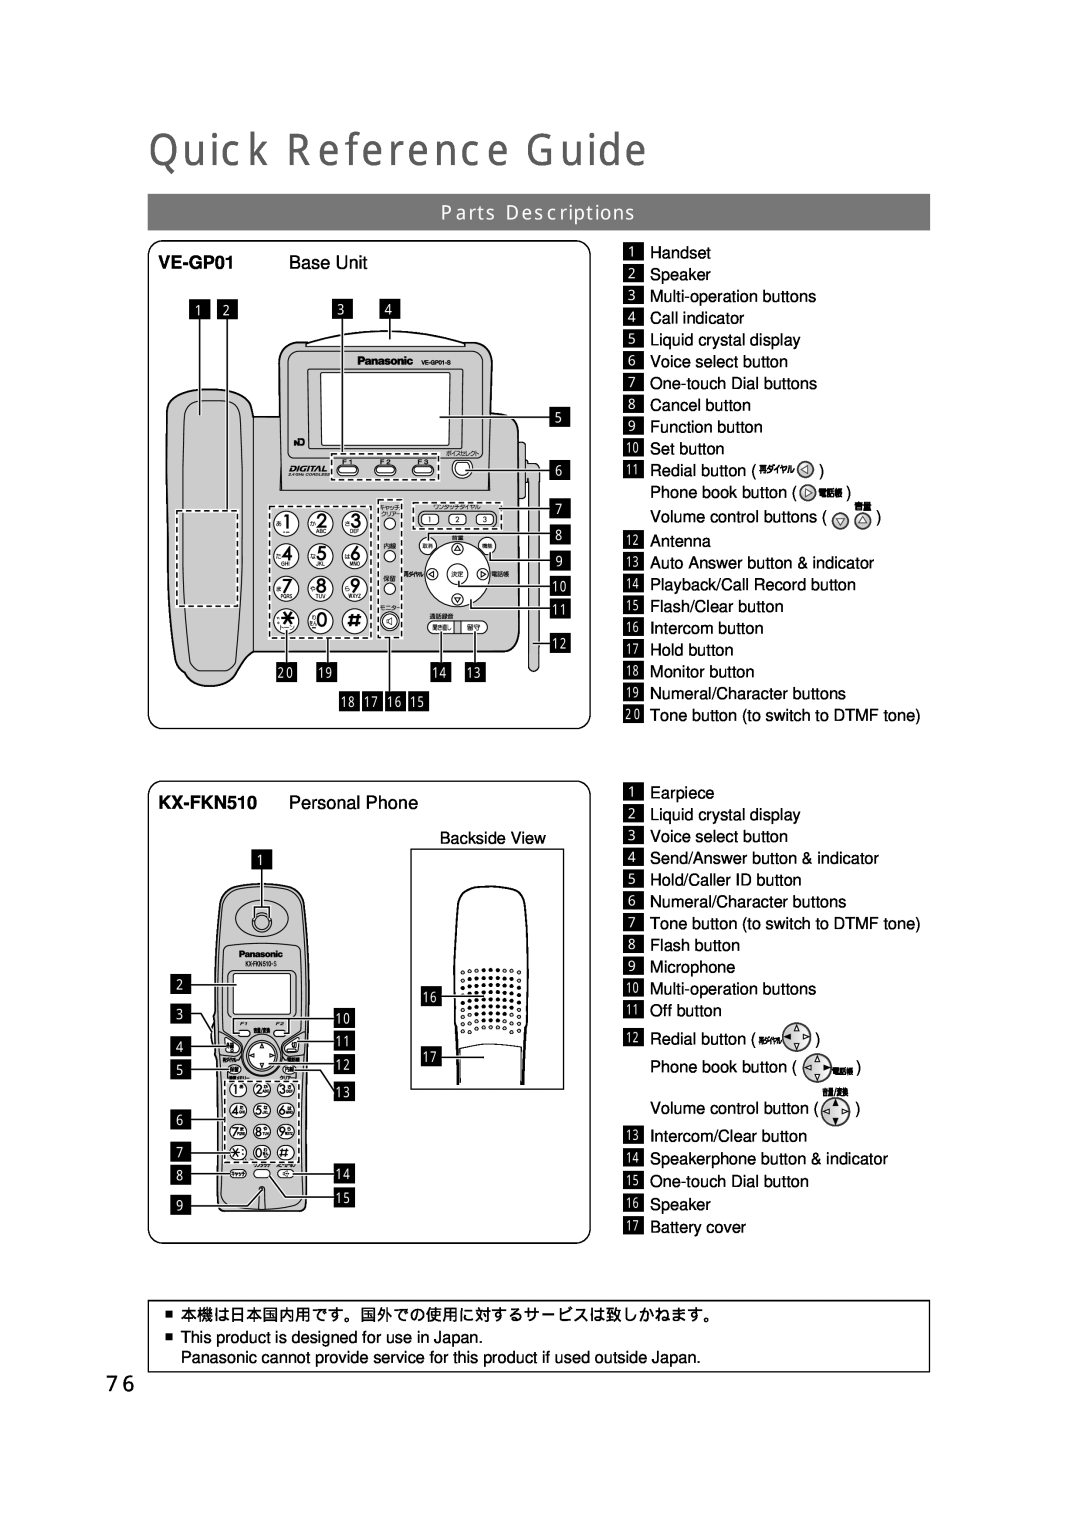 Panasonic manual Parts Descriptions, Quick Reference Guide, VE-GP01, Base Unit, KX-FKN510 Personal Phone 